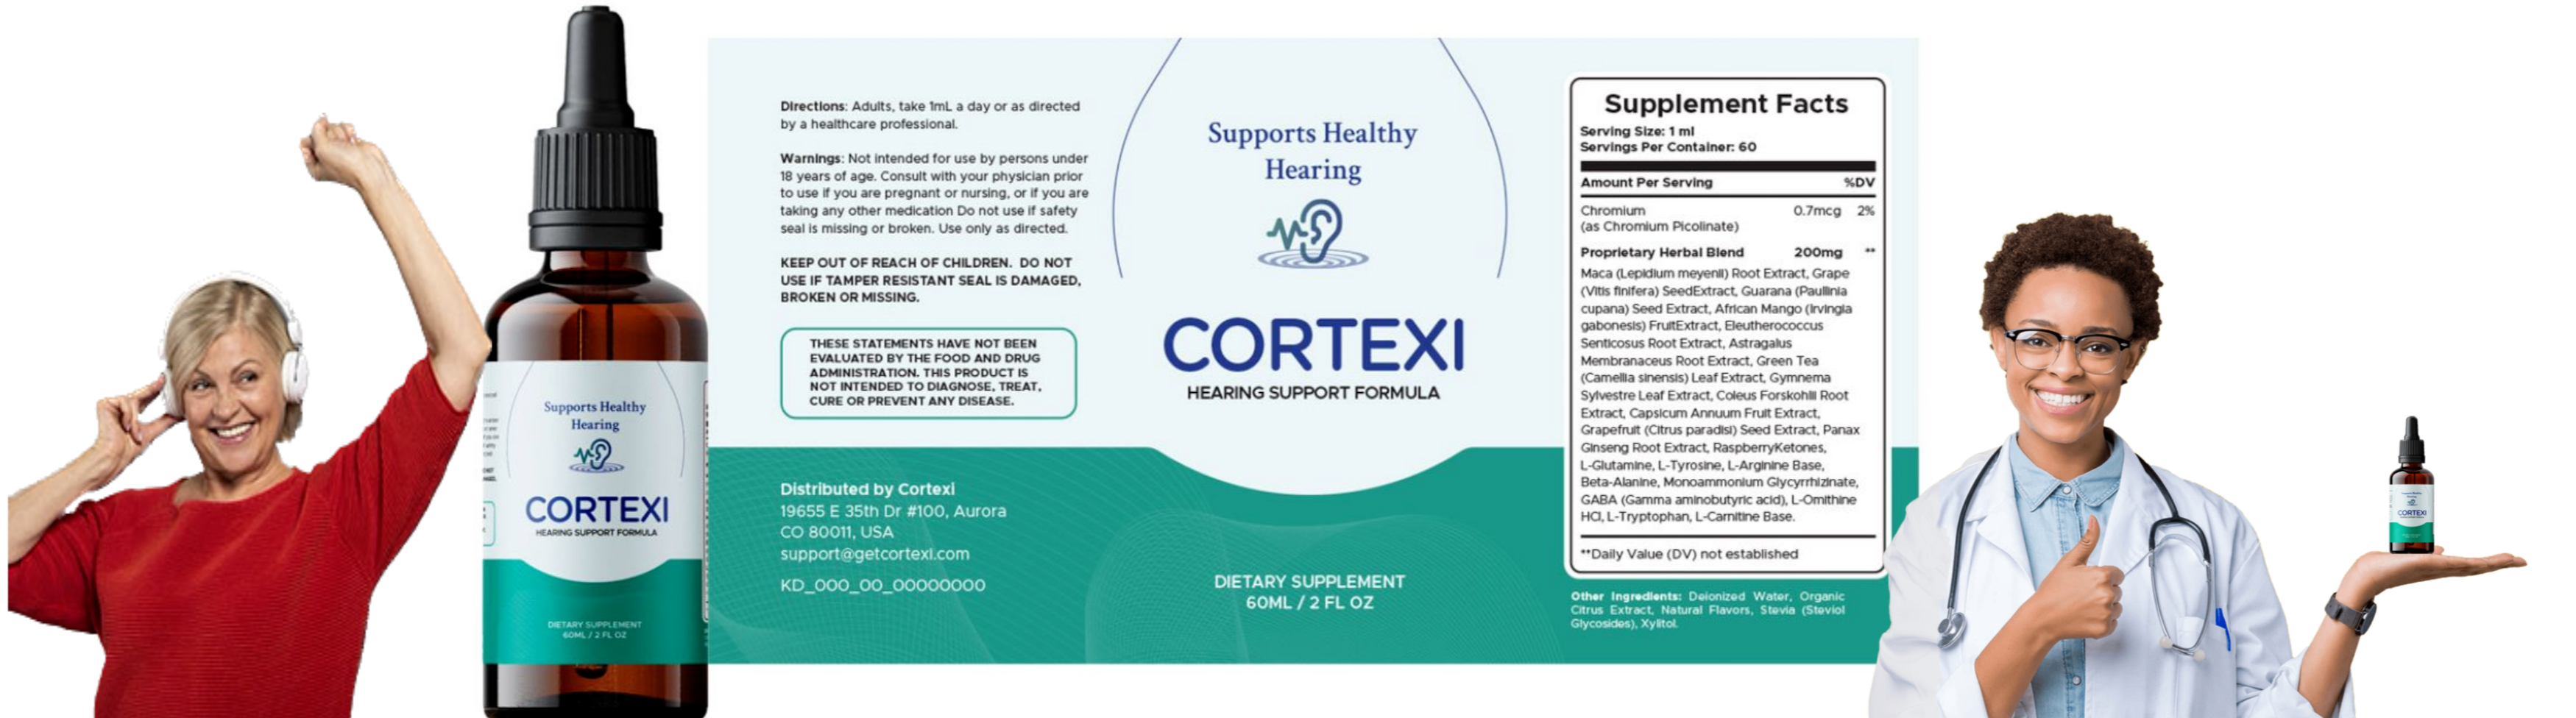 Cortexi Supplement Fact